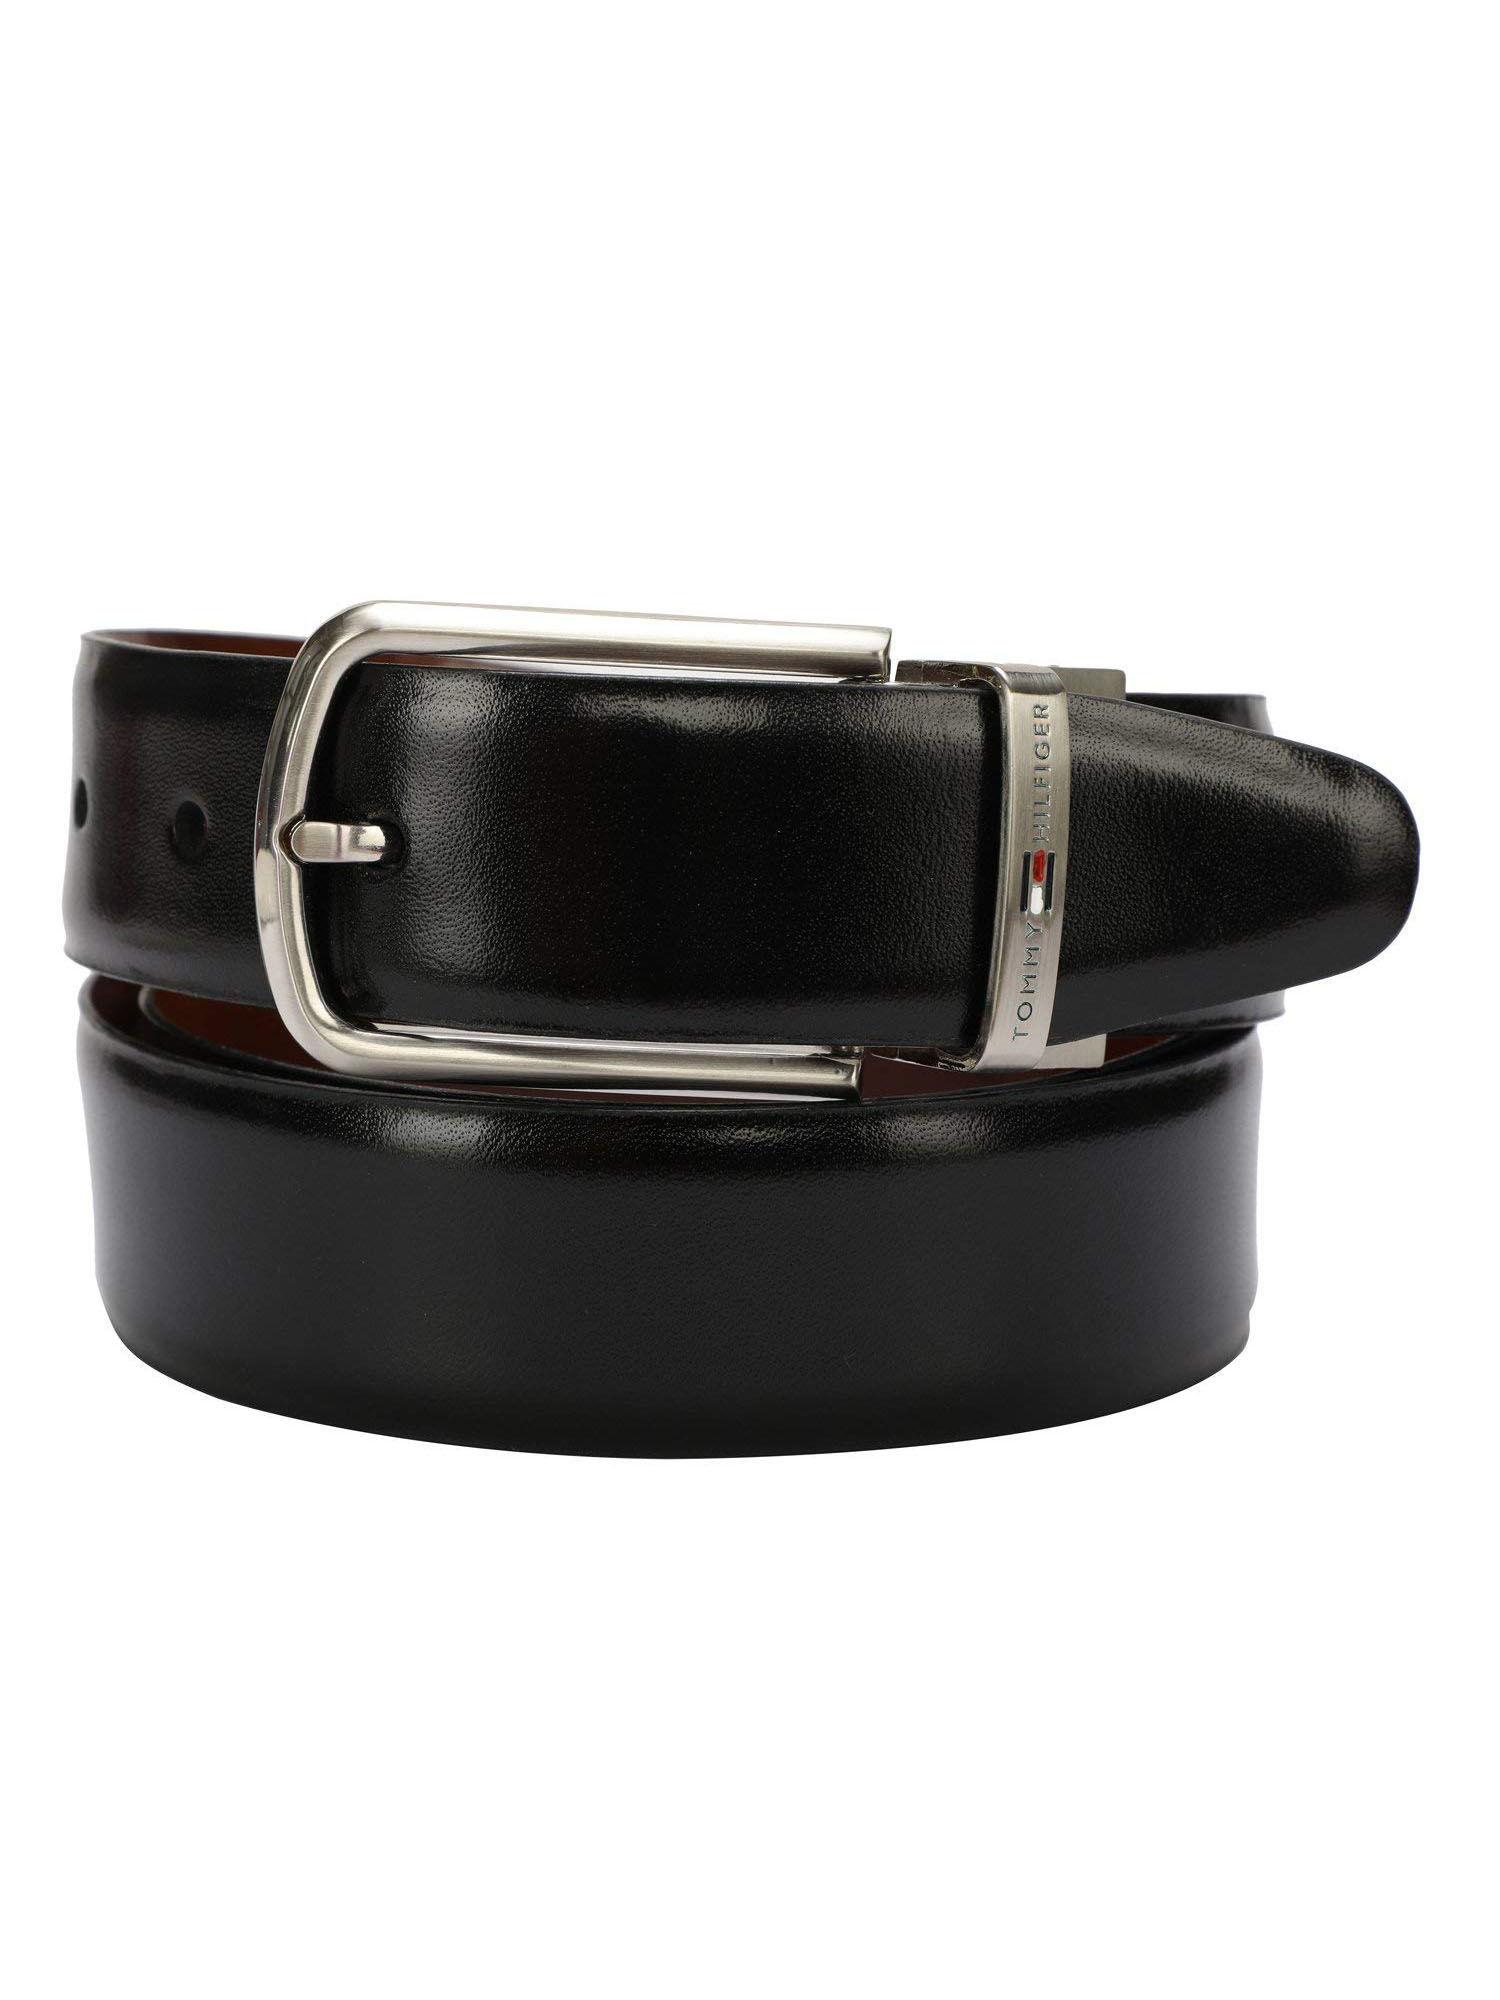 carlson mens leather reversible belt small size black + tan (8903496097337)